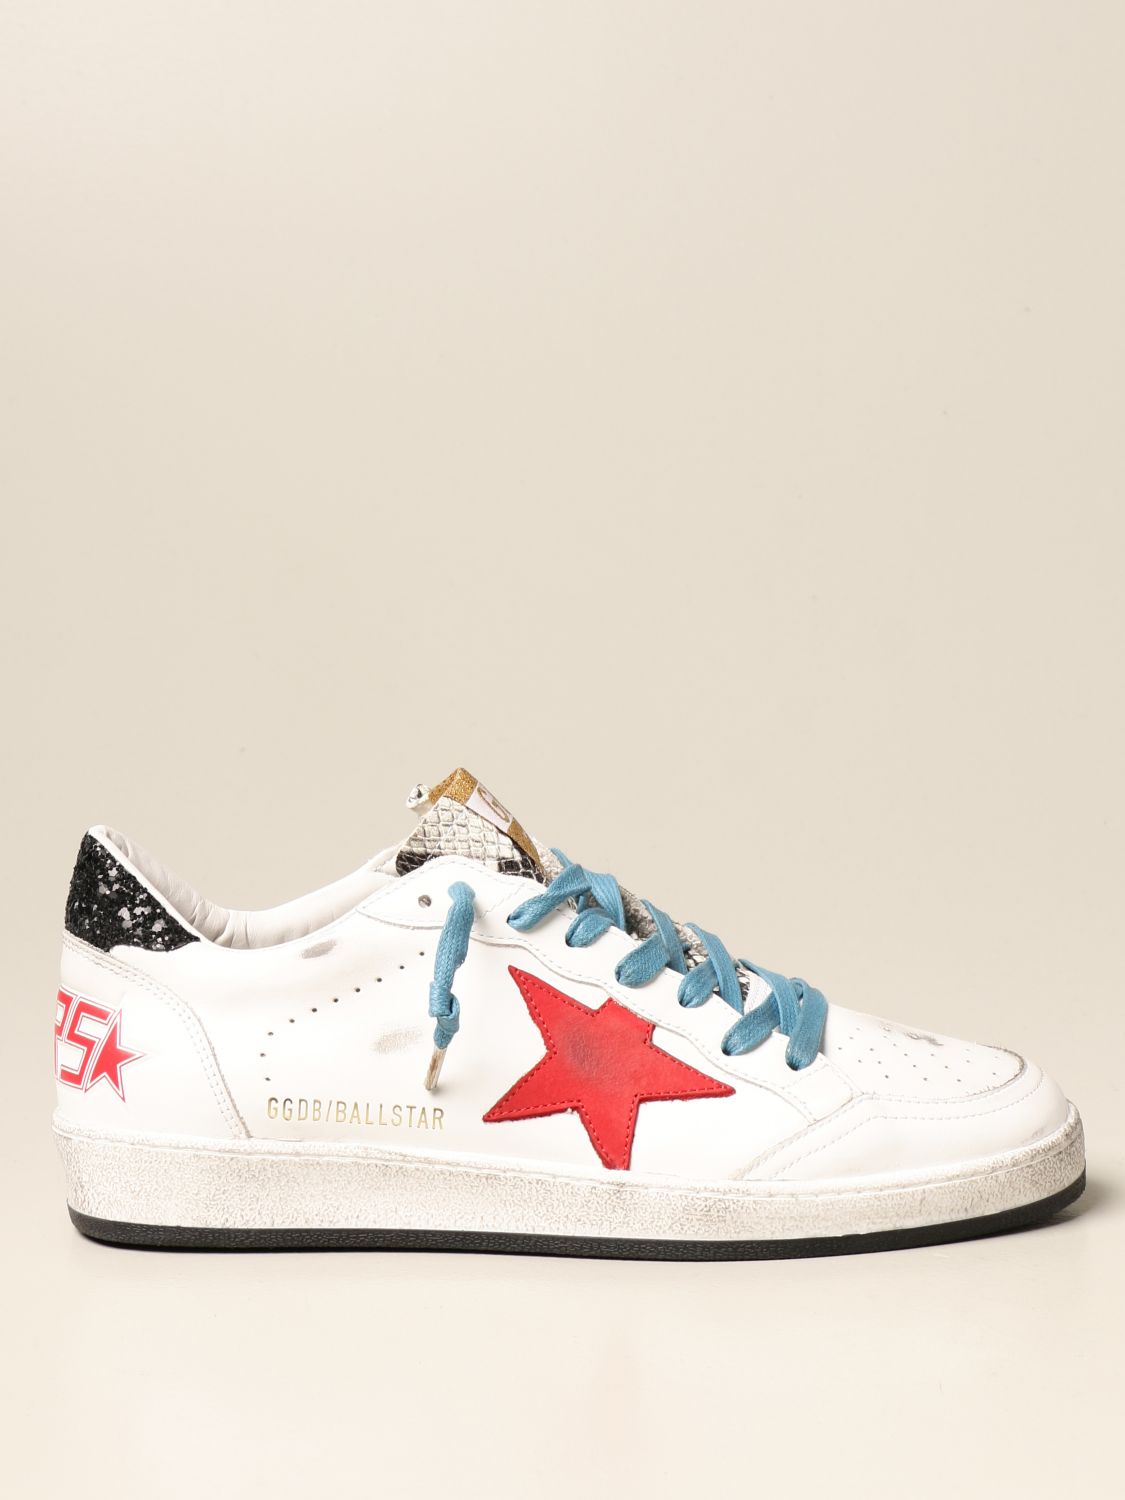 star sneakers